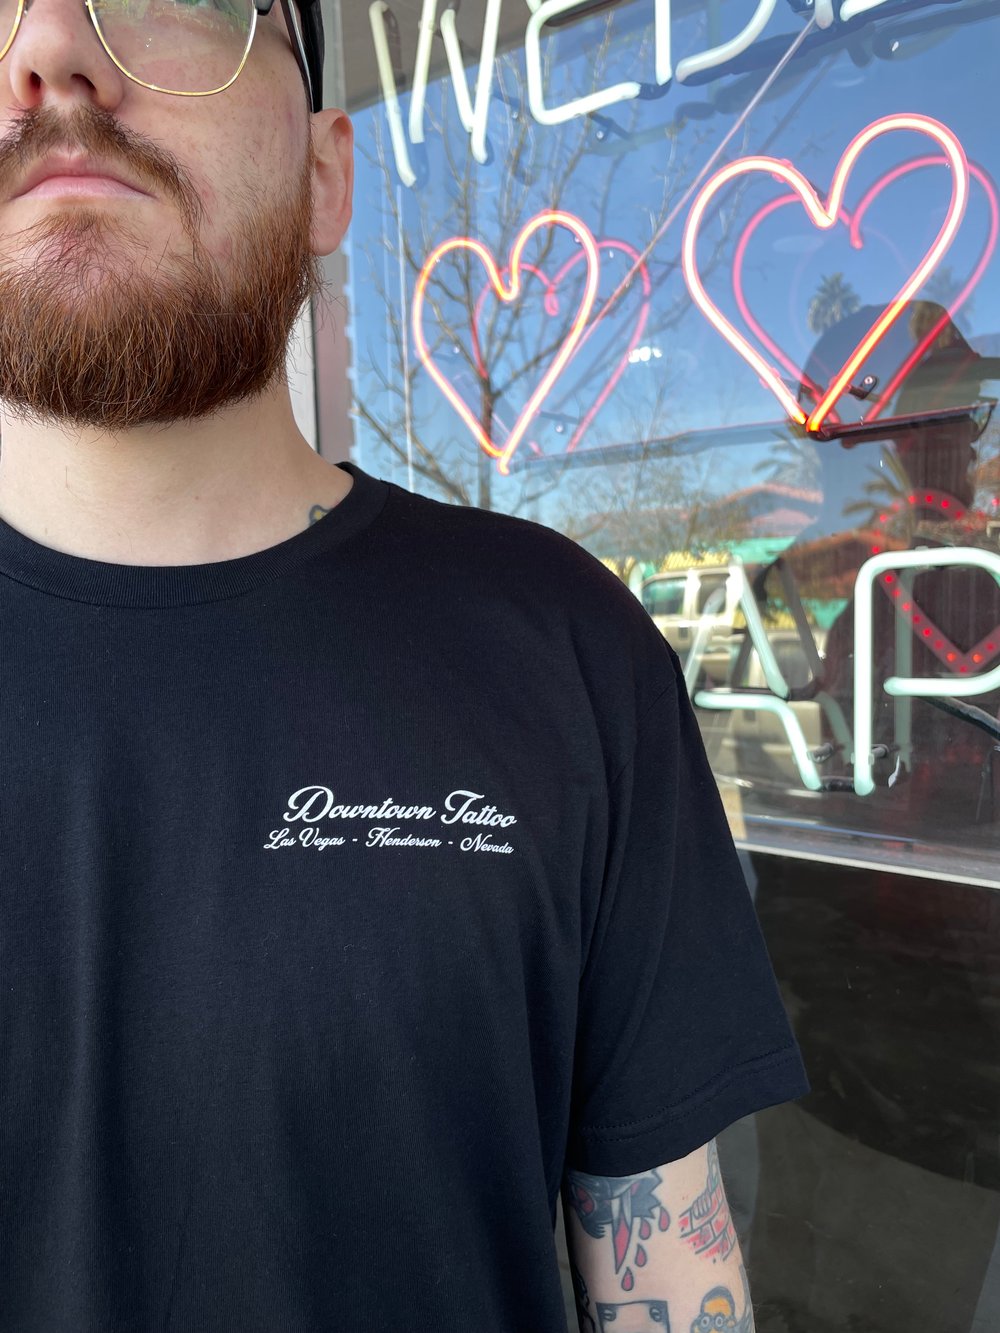 Lovers T-Shirt